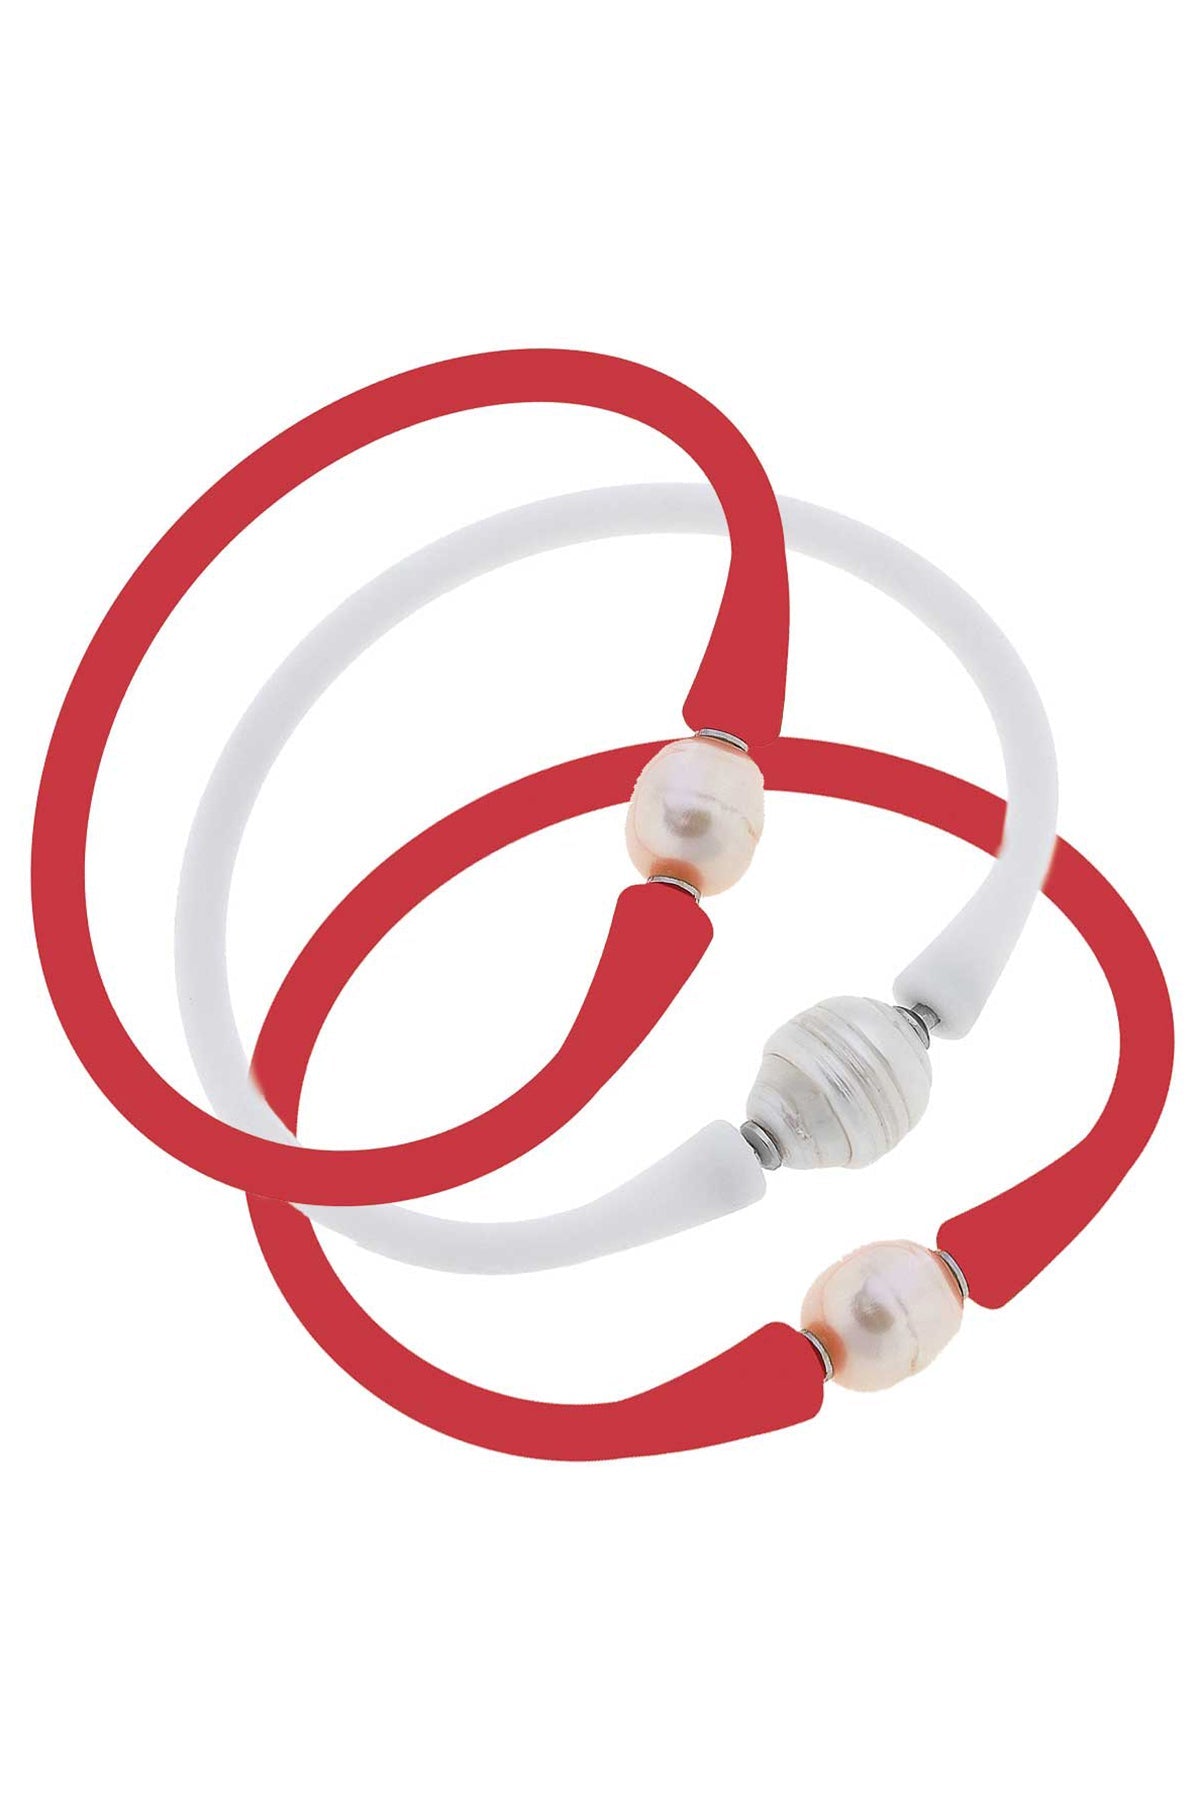 Bali Game Day Bracelet Set of 3 in Red & White